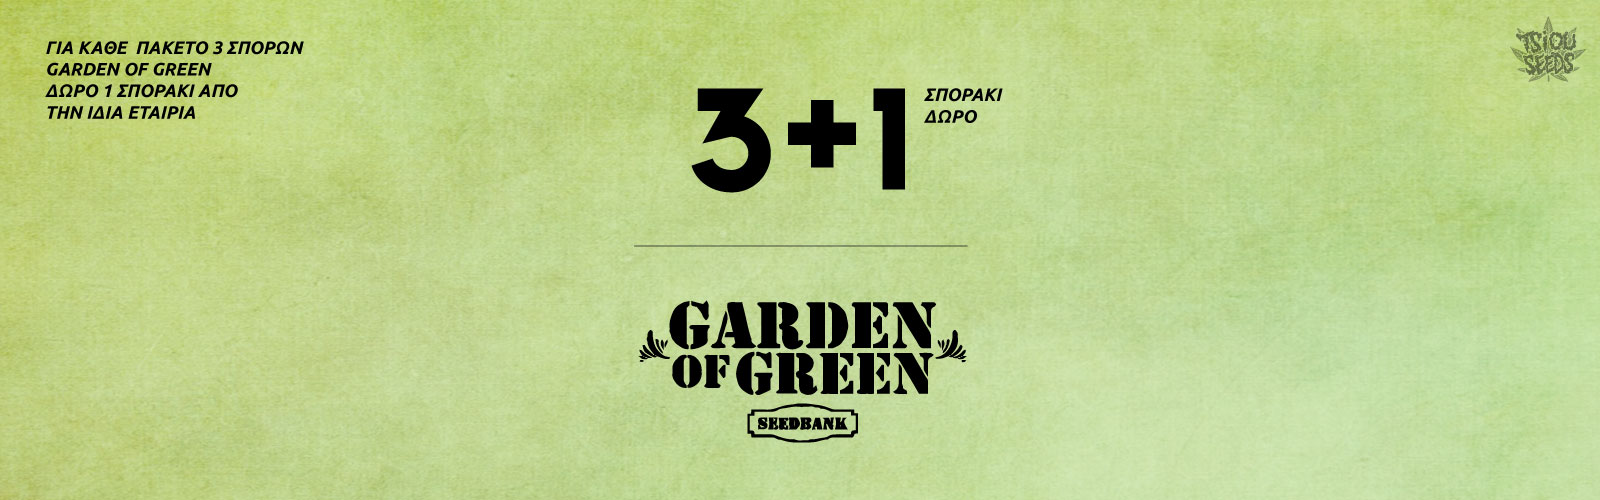 Garden-of-Green-Offer-1